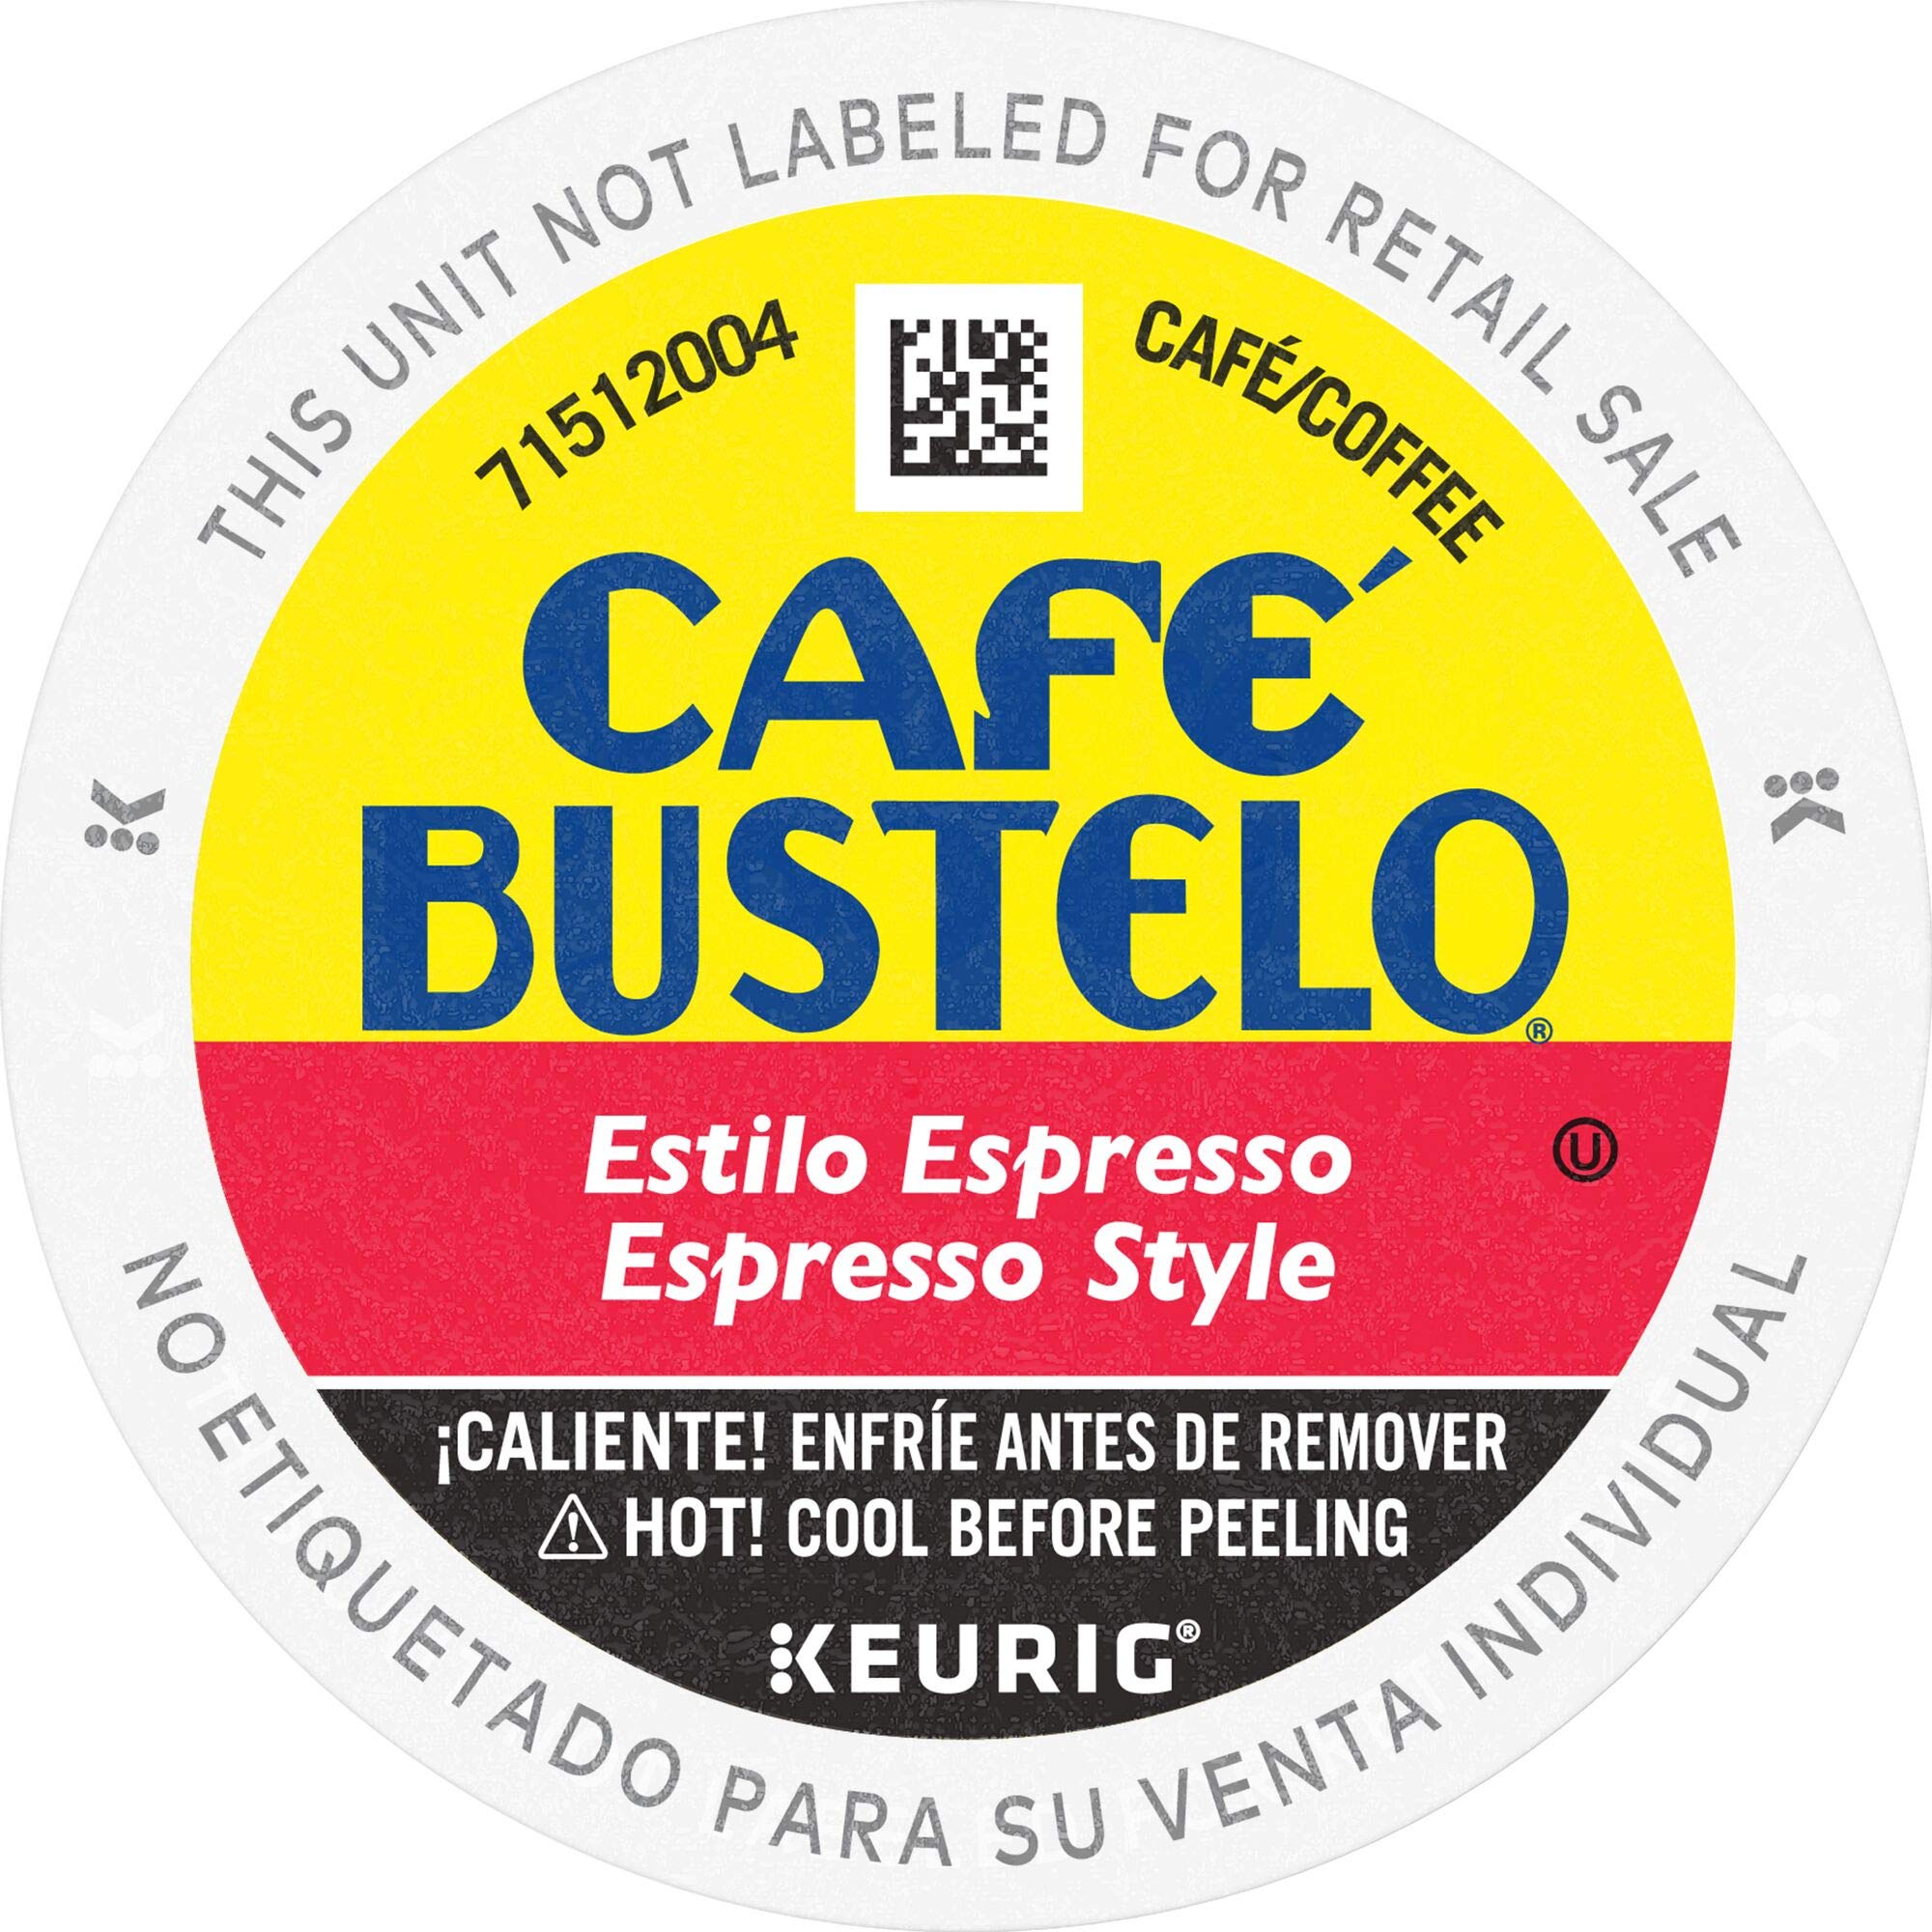 Café Bustelo Espresso Style Dark Roast Coffee 96 Keurig K-Cup Pods - Amazon free shipping $20.39